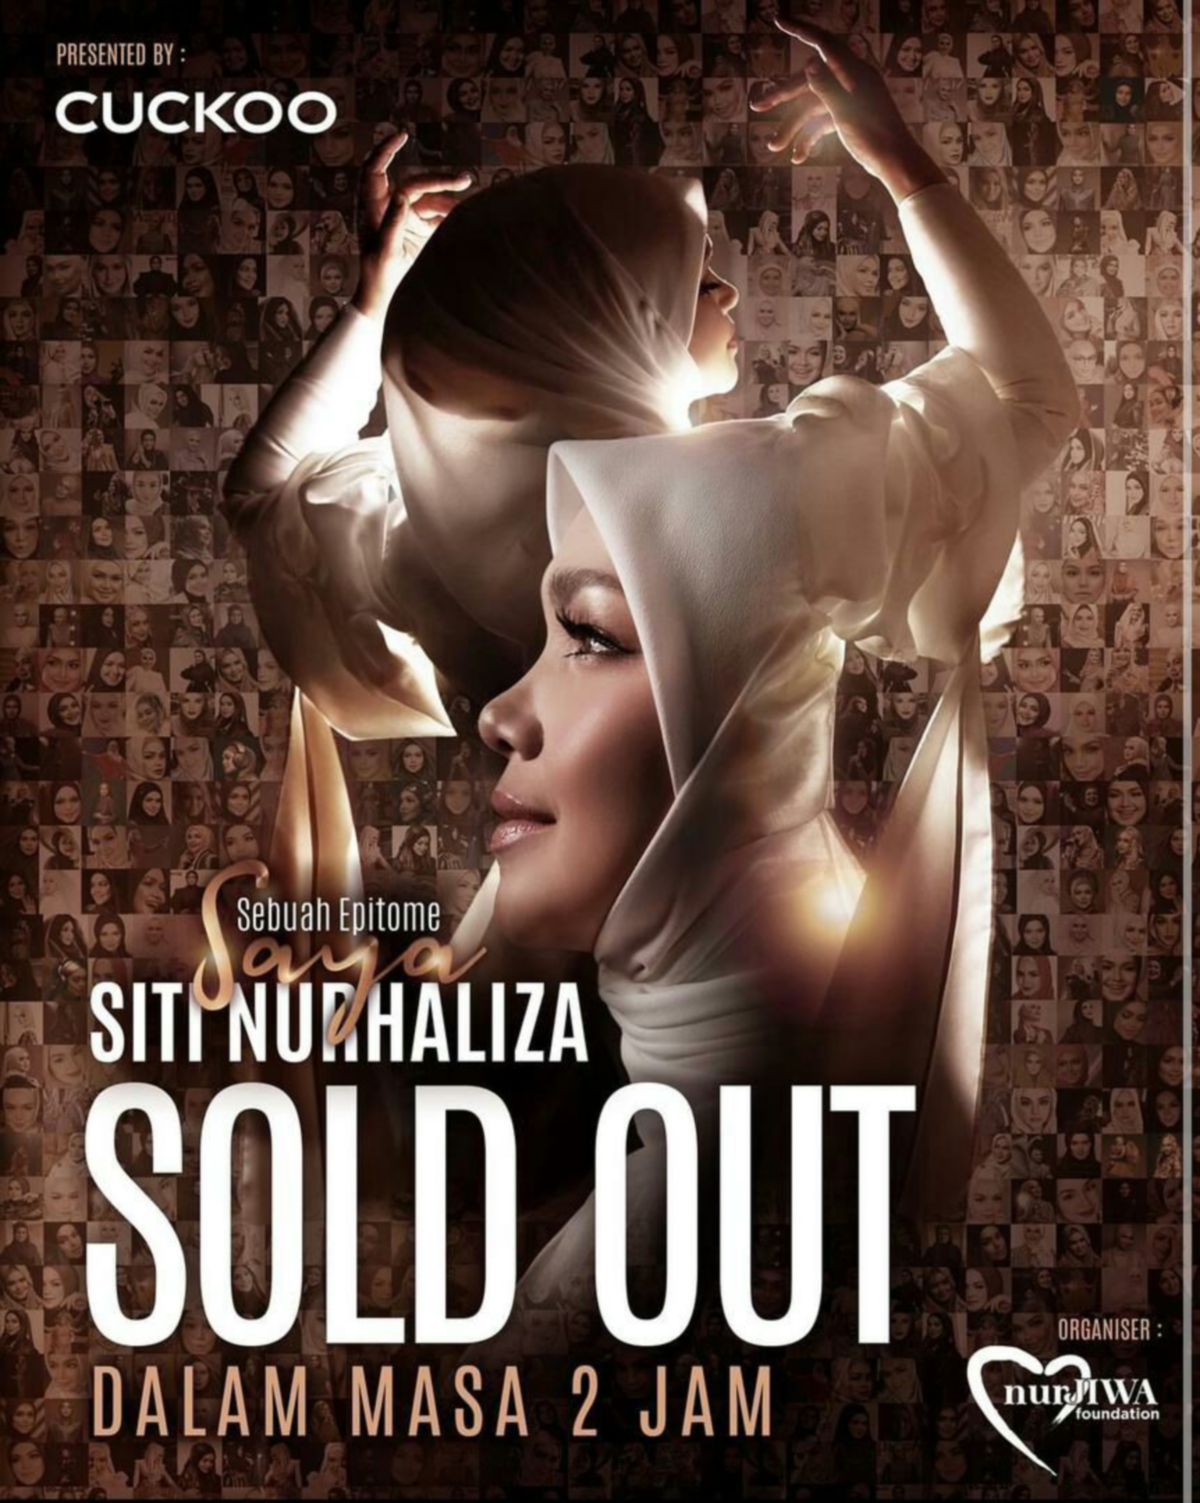 Tiket konsert Siti Nurhaliza 'sold out' dalam masa 2 jam